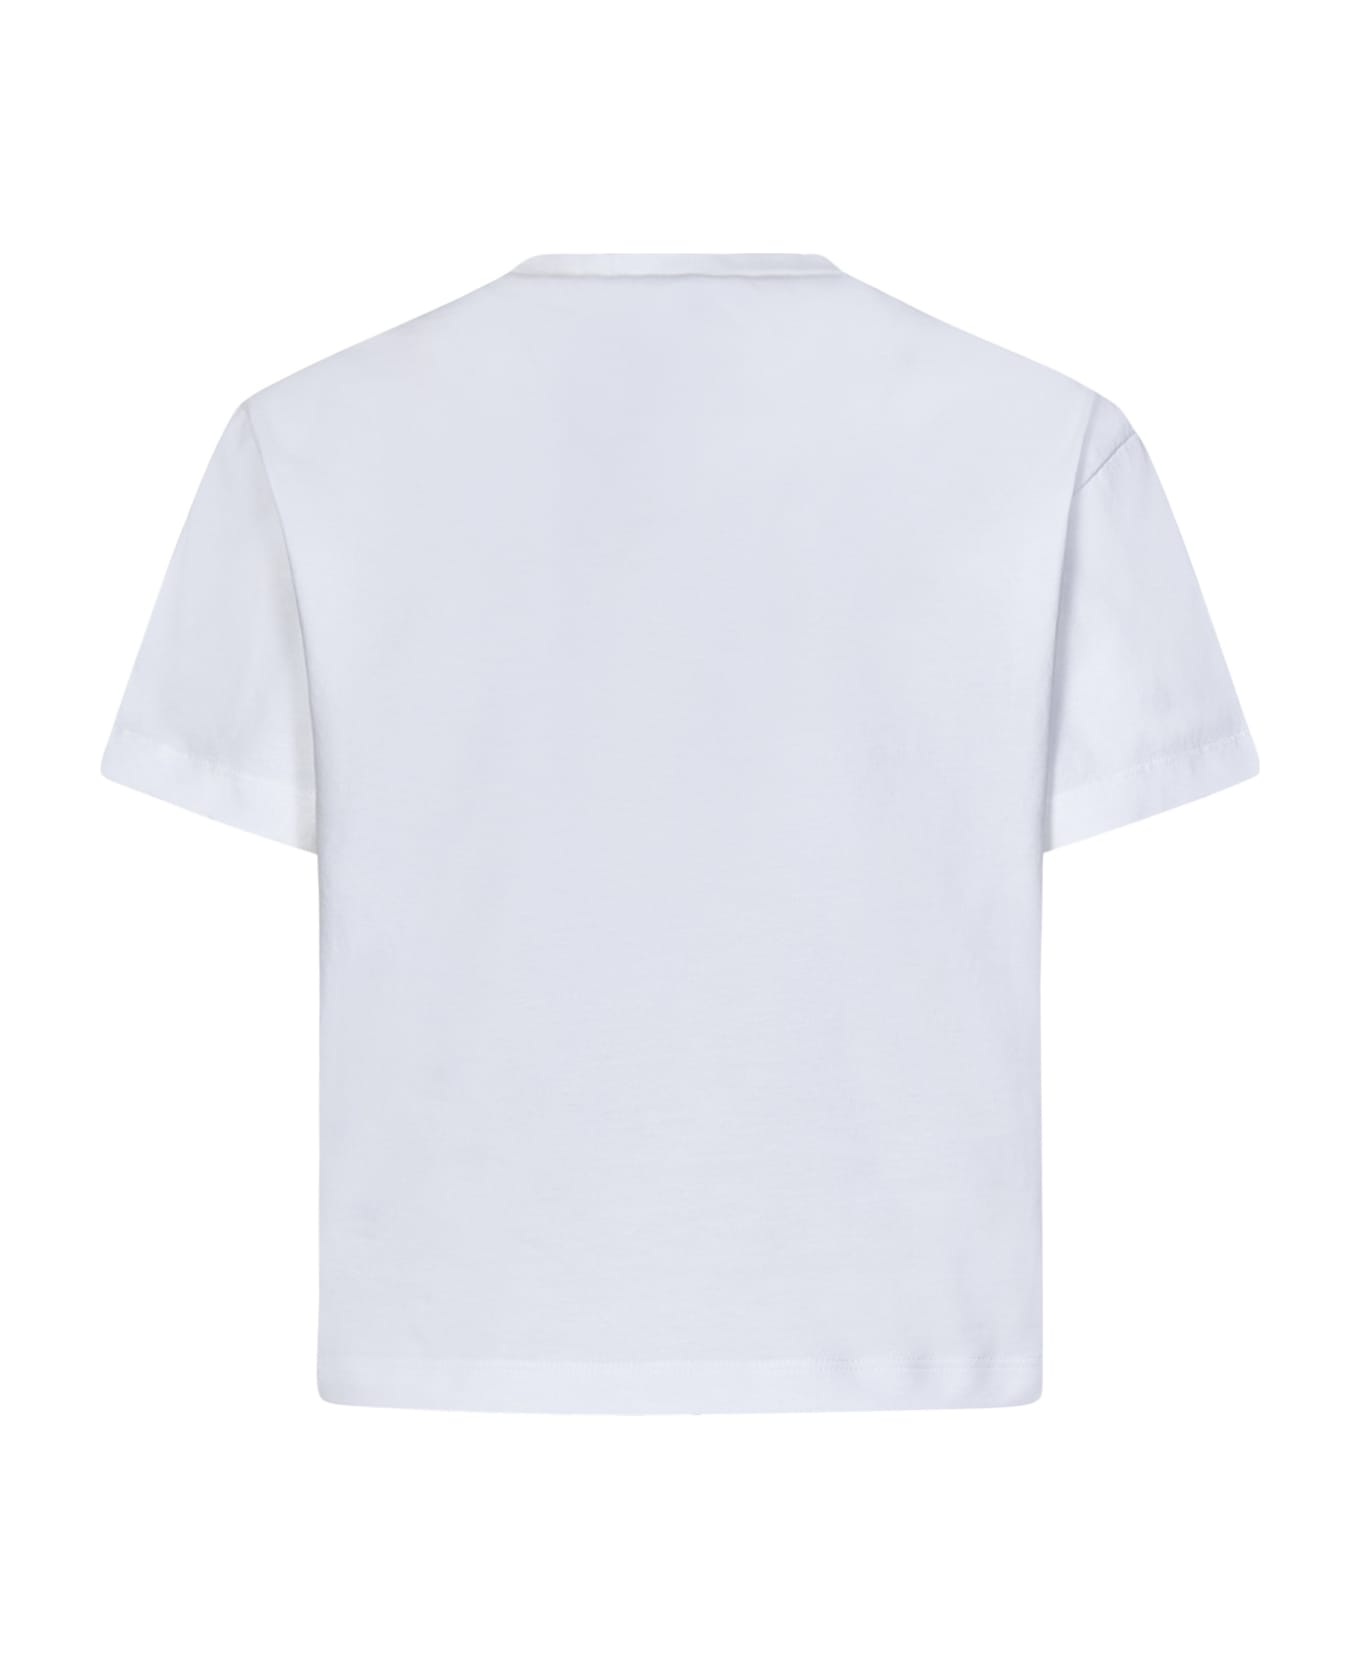 Dsquared2 Boxy Fit Heart T-shirt - White